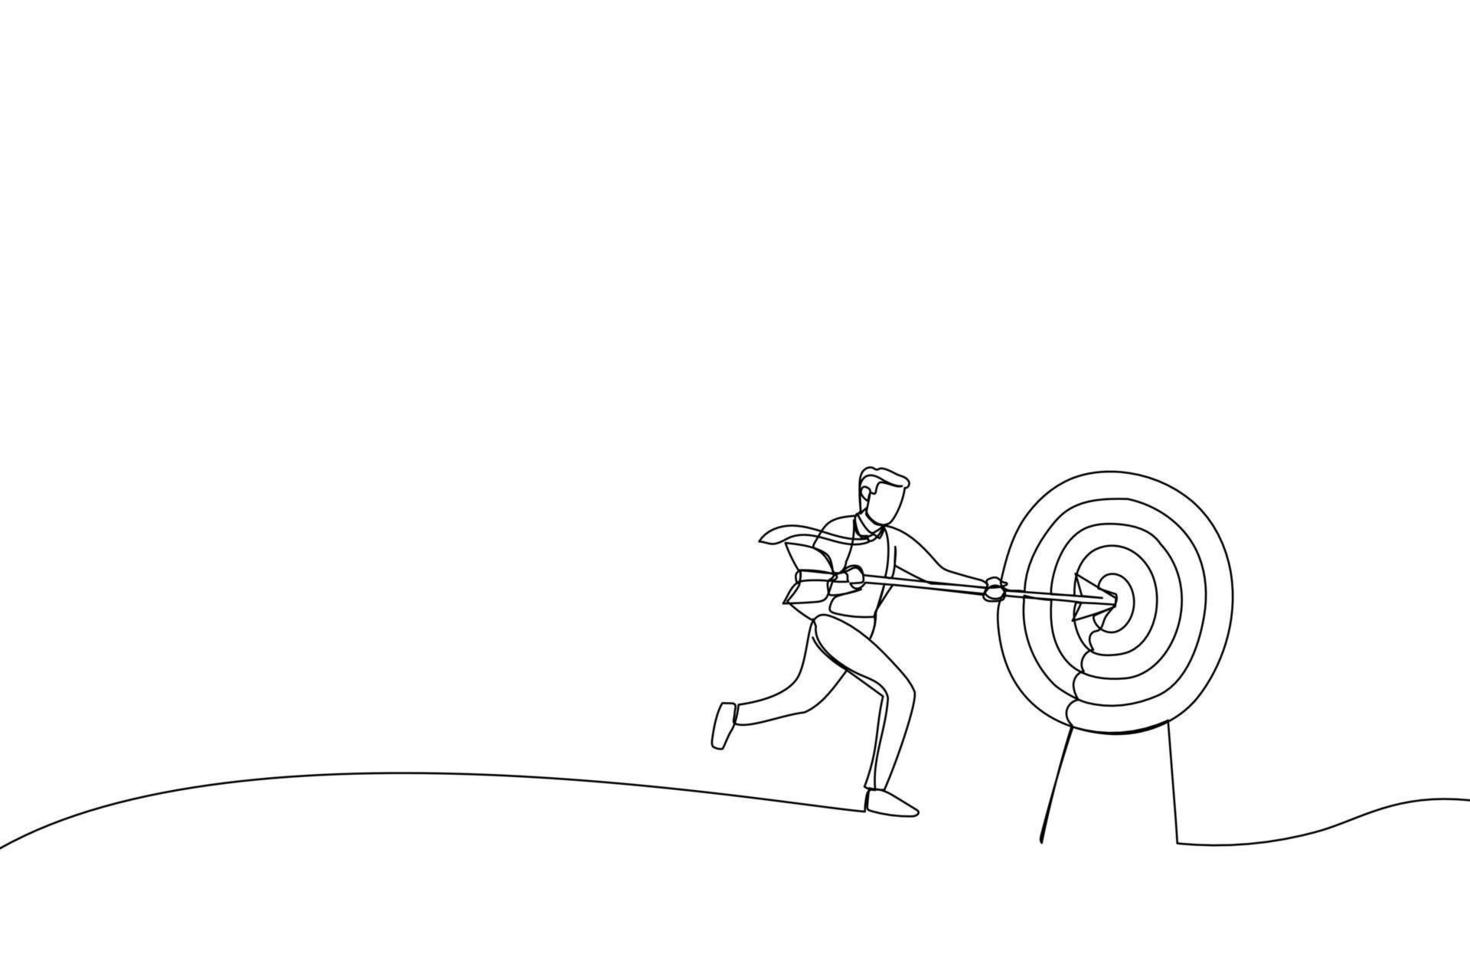 Cartoon of businessman shooting target with arrow. Metaphor for market goal achievement, financial aim. Single continuous line art style vector